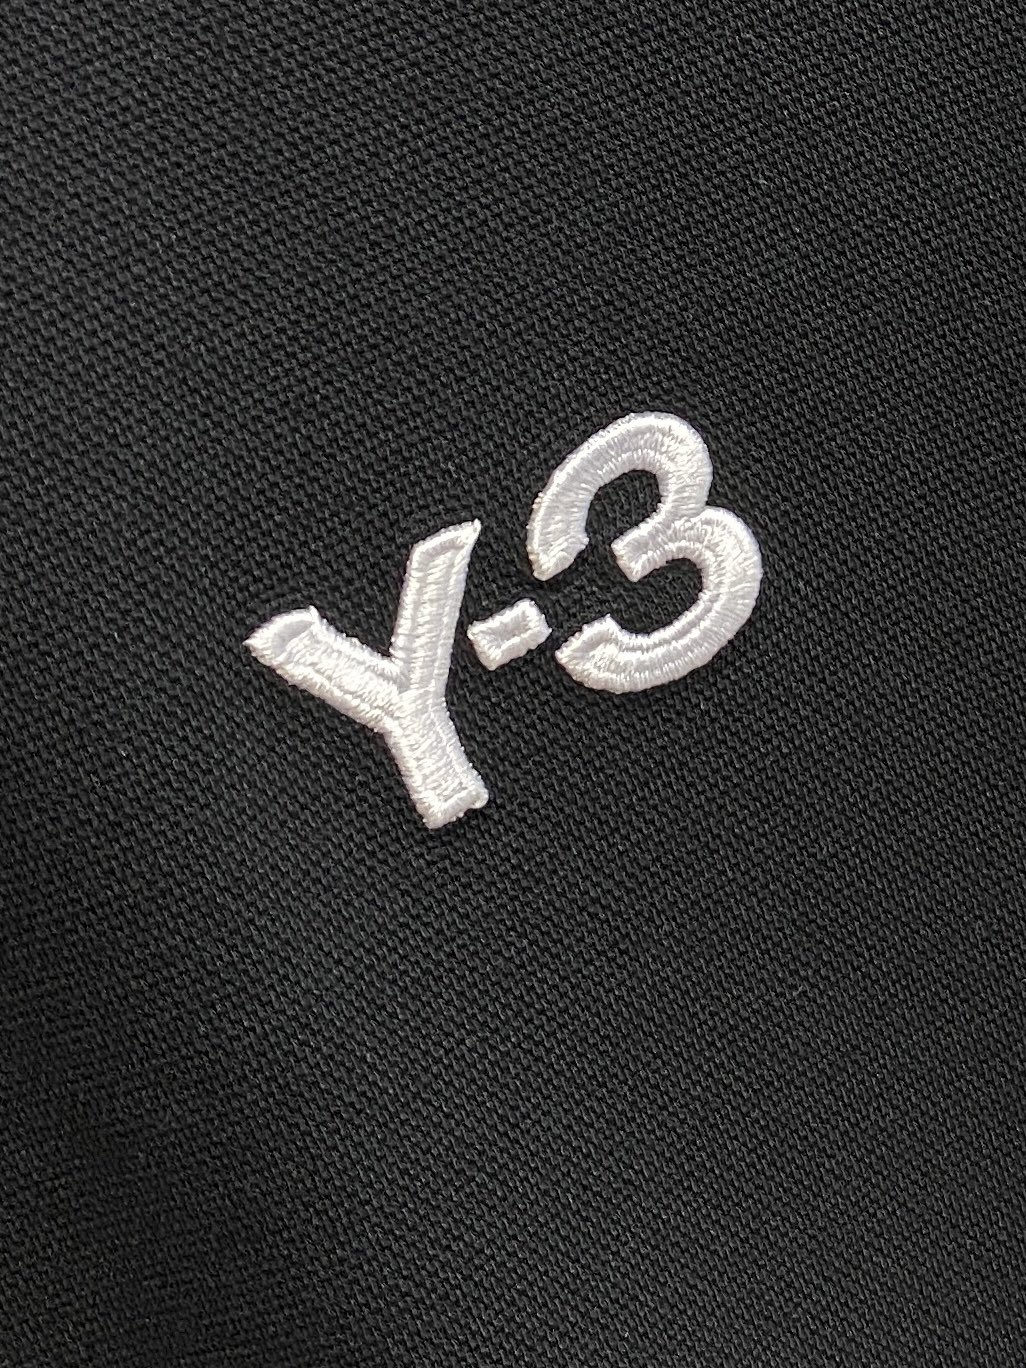 Y-32024新品卫衣外套帅气时尚胸前精致刺绣字母logo简约百搭款面料棉不仅挺括保持潮流的廓形又穿着舒